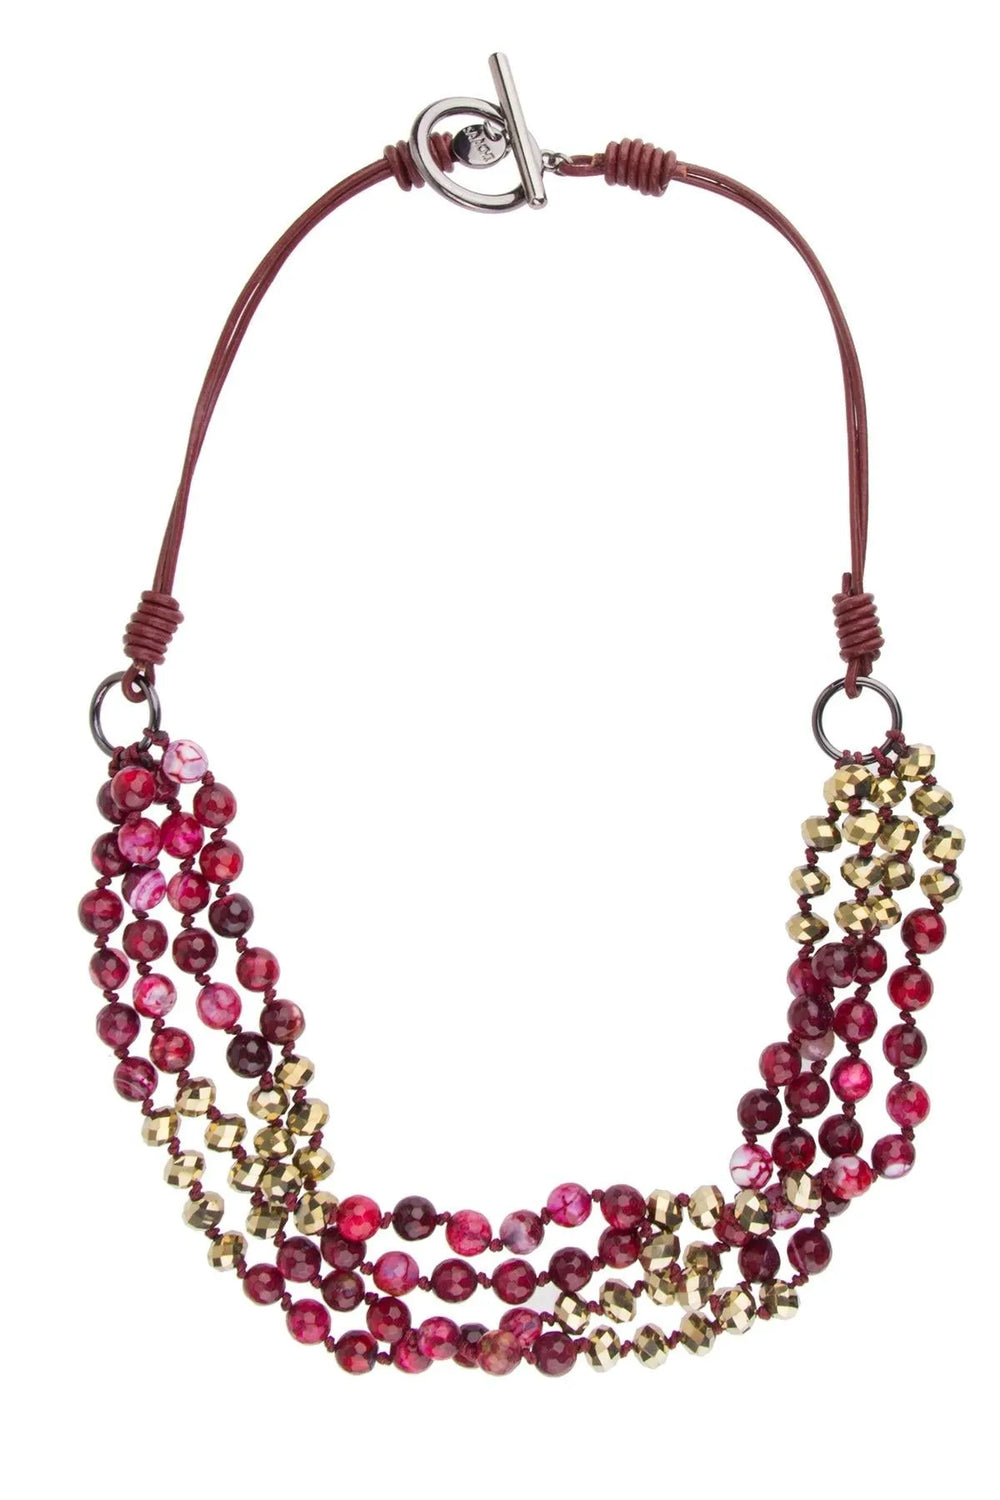 Four-Strand Brahma Beaded Necklace Medium Violetred